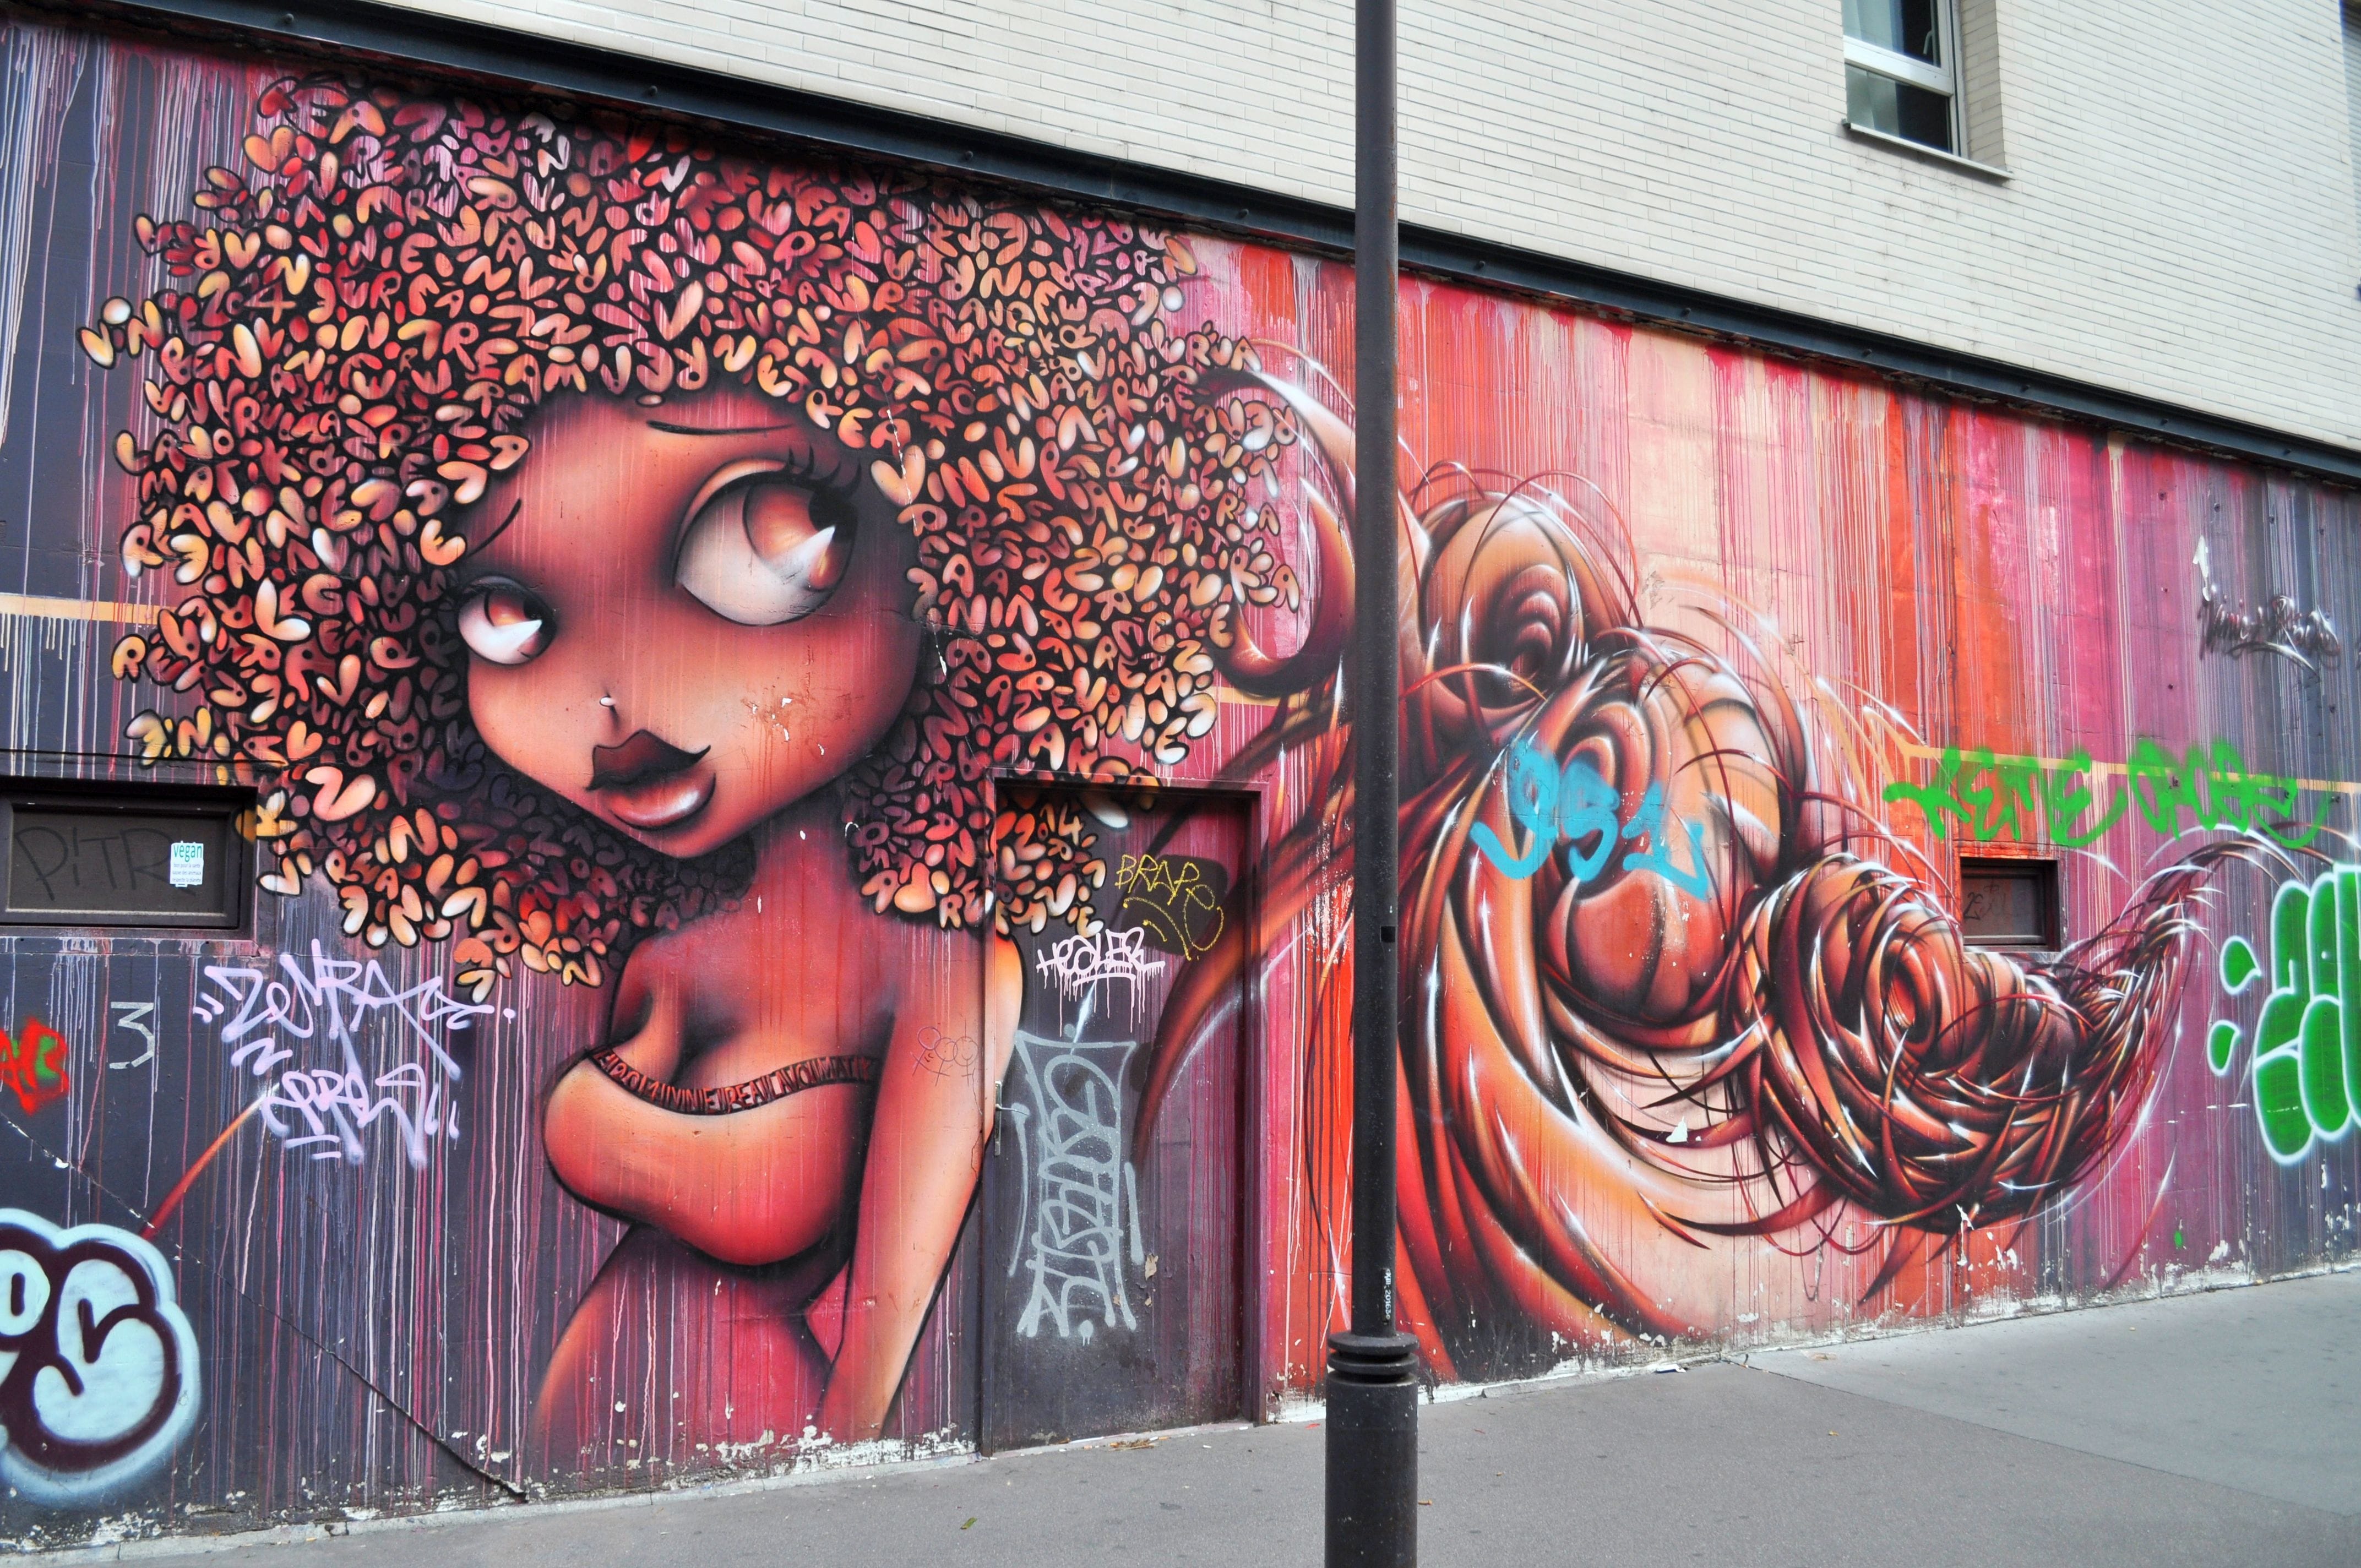 Graffiti 4565  by the artist Vinie captured by elettrotajik in Paris France